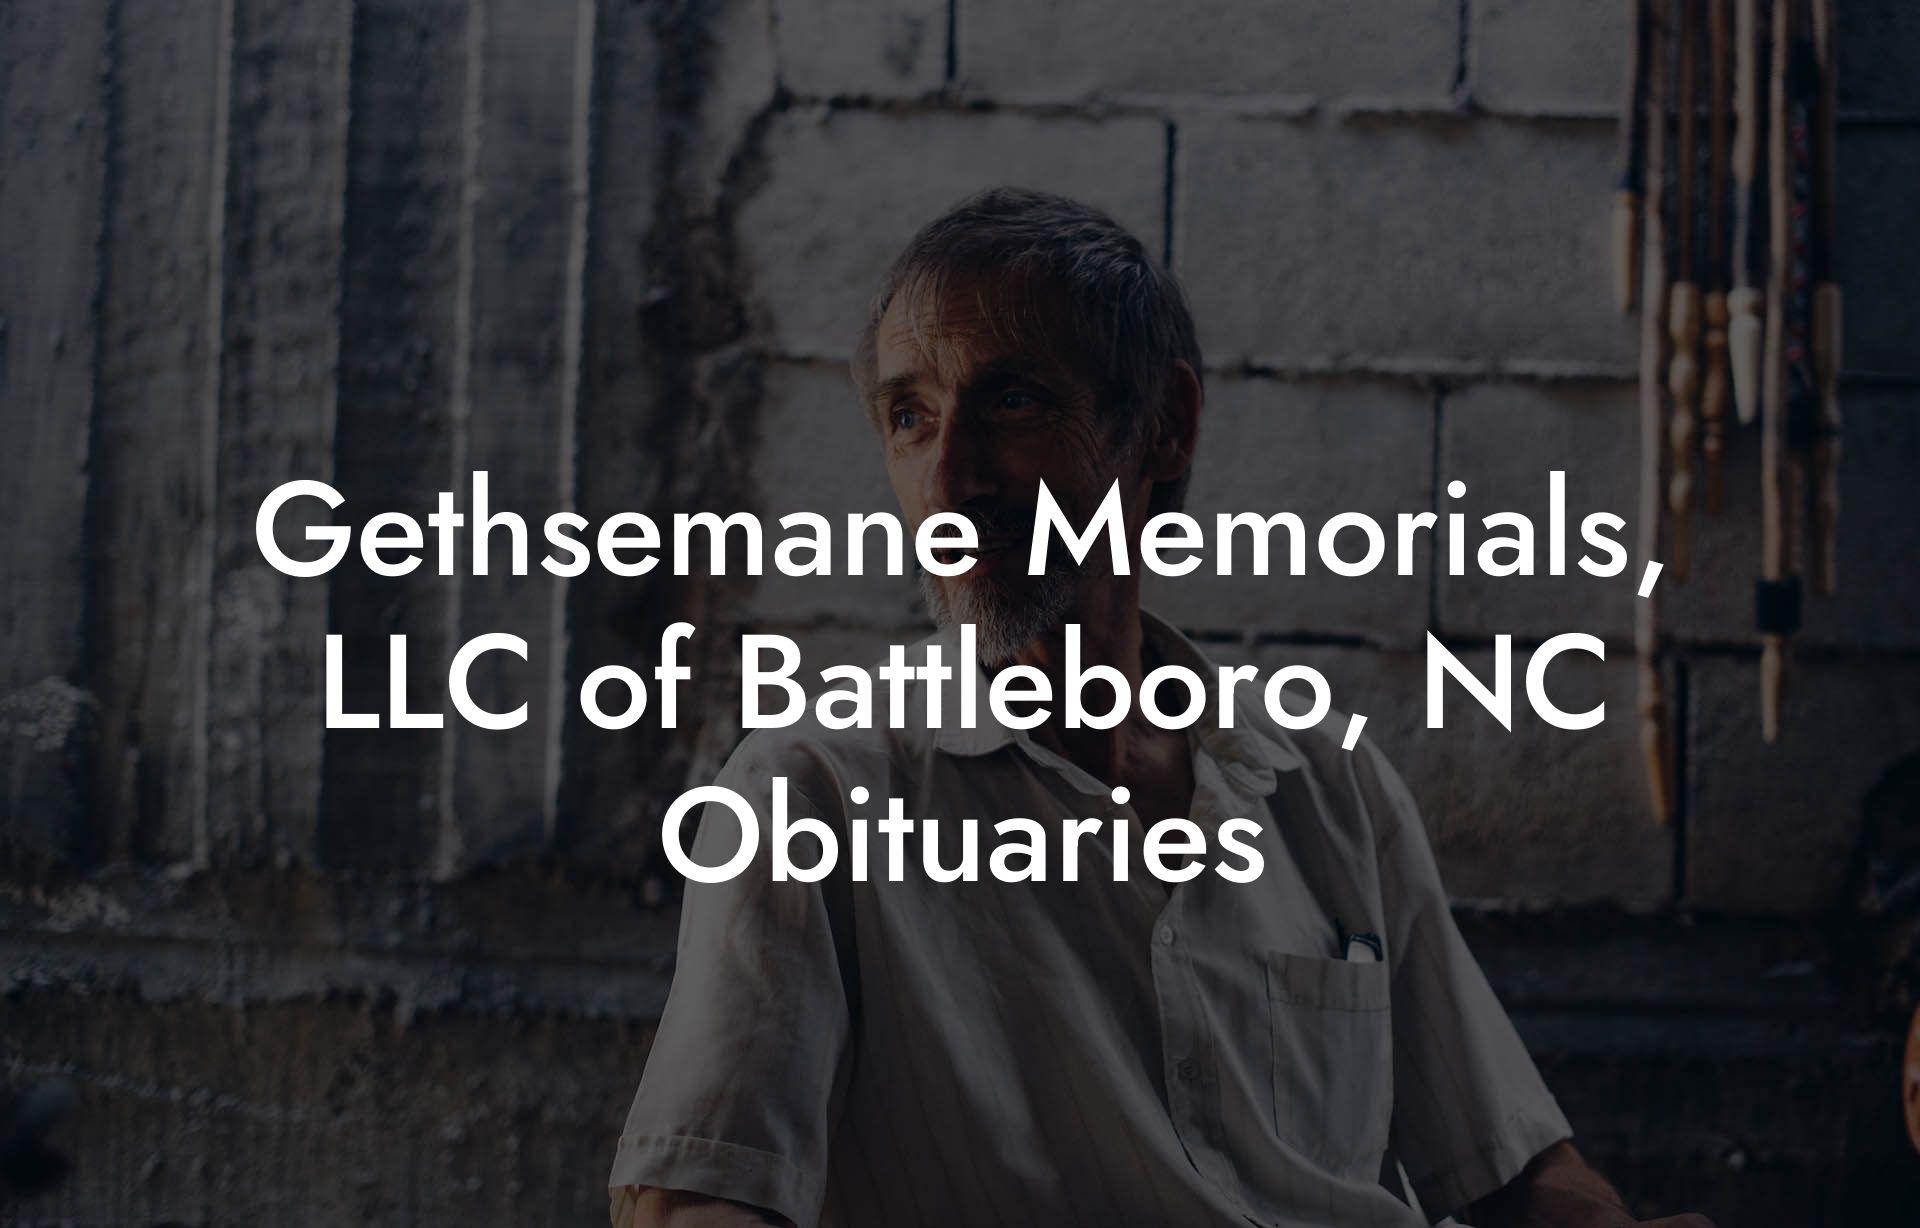 Gethsemane Memorials, LLC of Battleboro, NC Obituaries